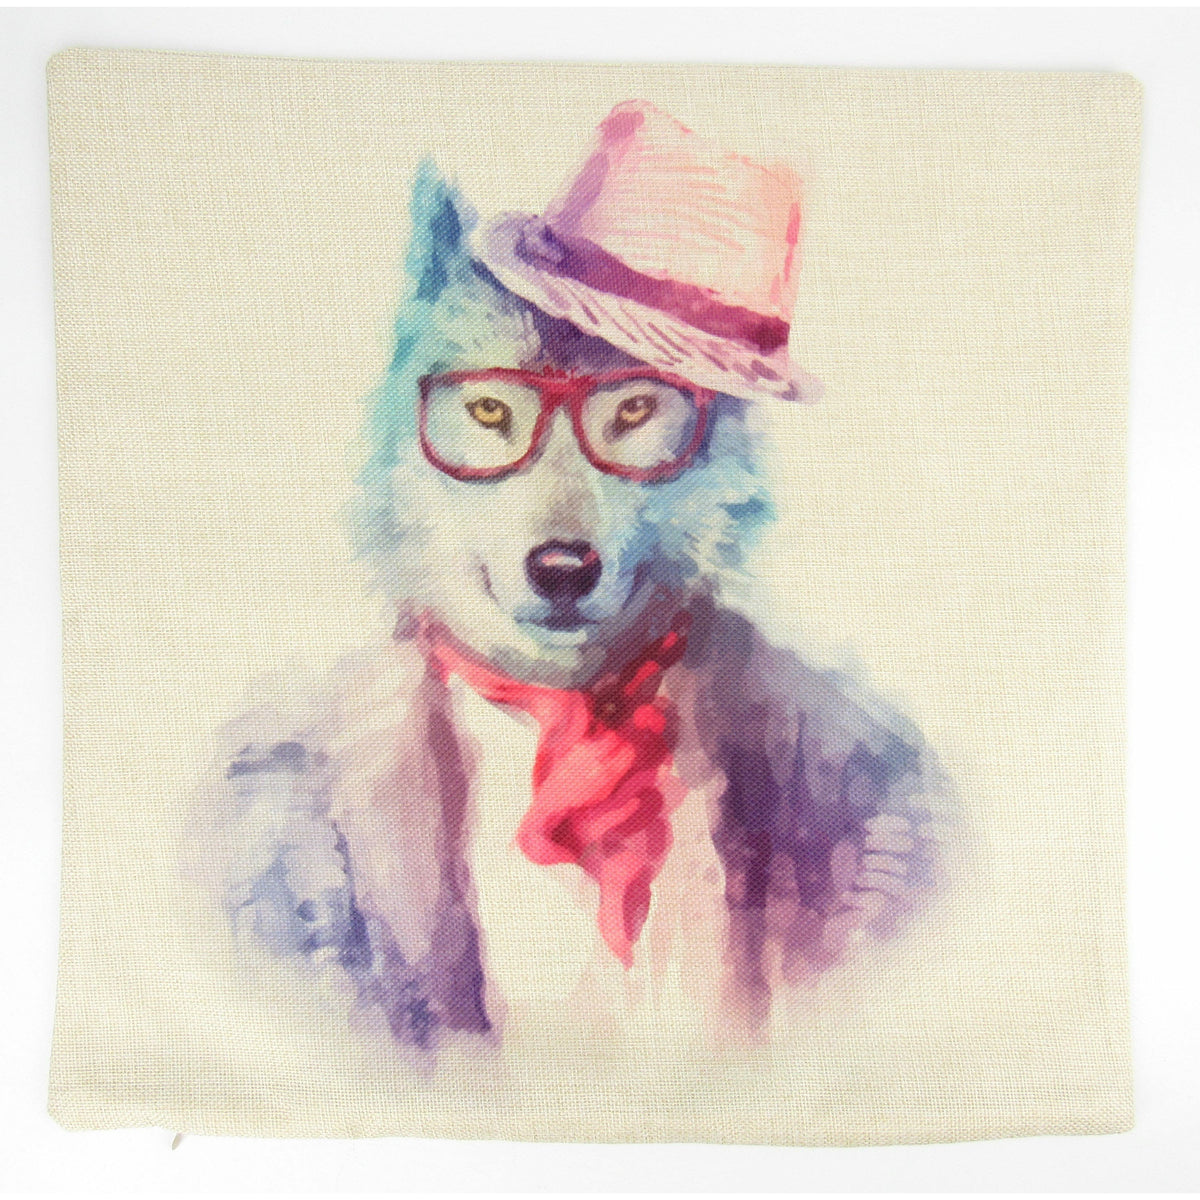 UniikPillows Wolf Hipster | Pillow Cover | Throw Pillow | Home Decor | Animal Print Accent Pillow | Animal Art | Animal Print Decorative Pillow | Gift by UniikPillows